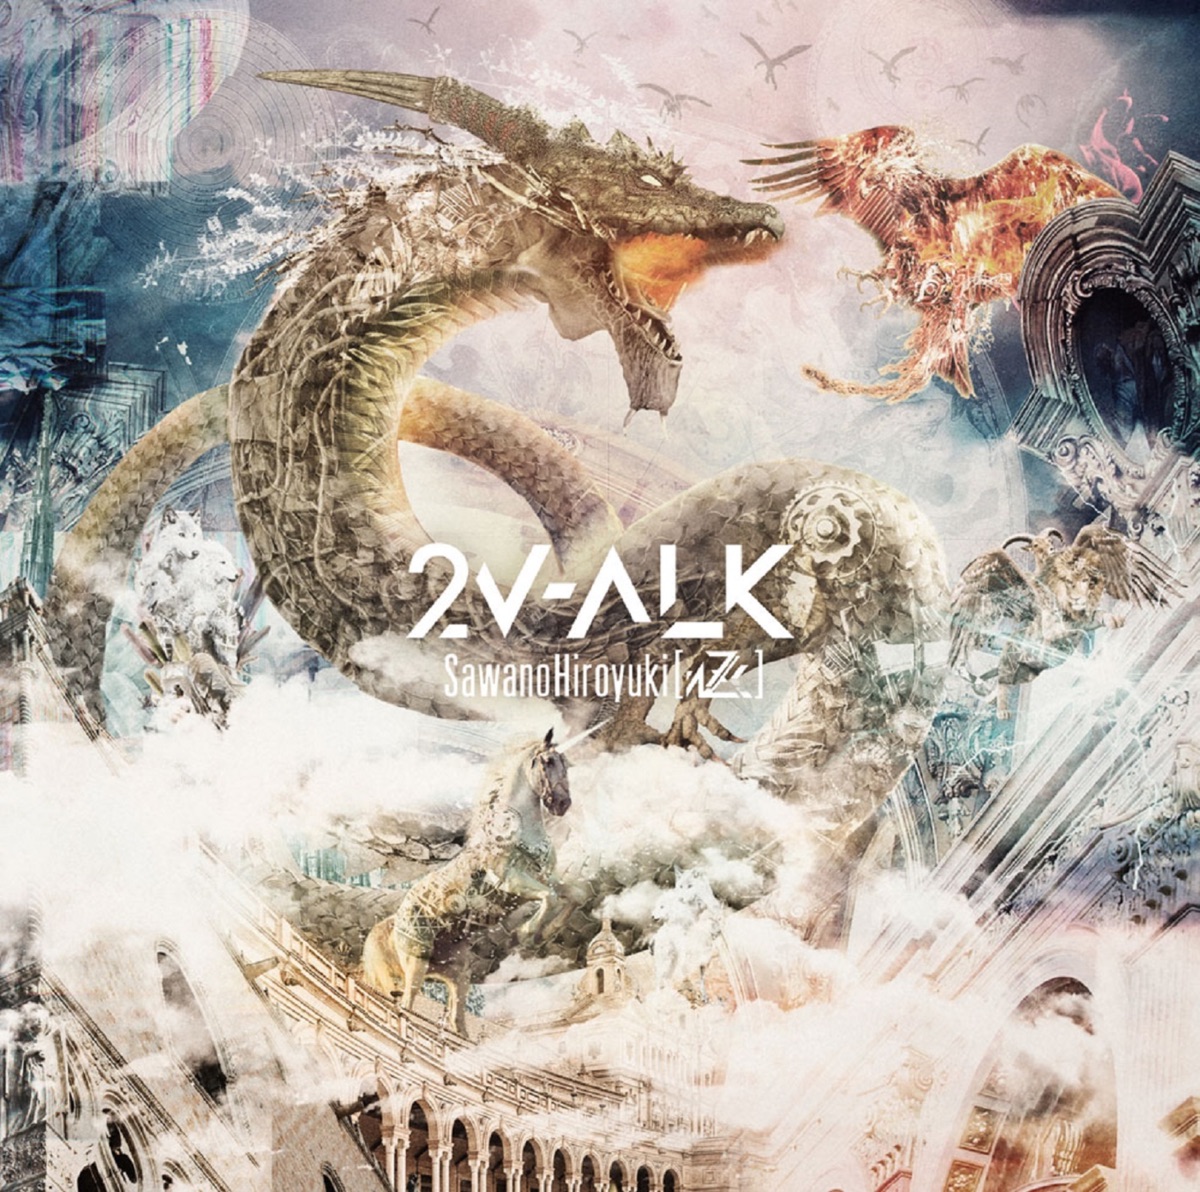 Cover art for『SawanoHiroyuki[nzk]:Yosh - mio MARE ＜2v-alk_v＞』from the release『2V-ALK